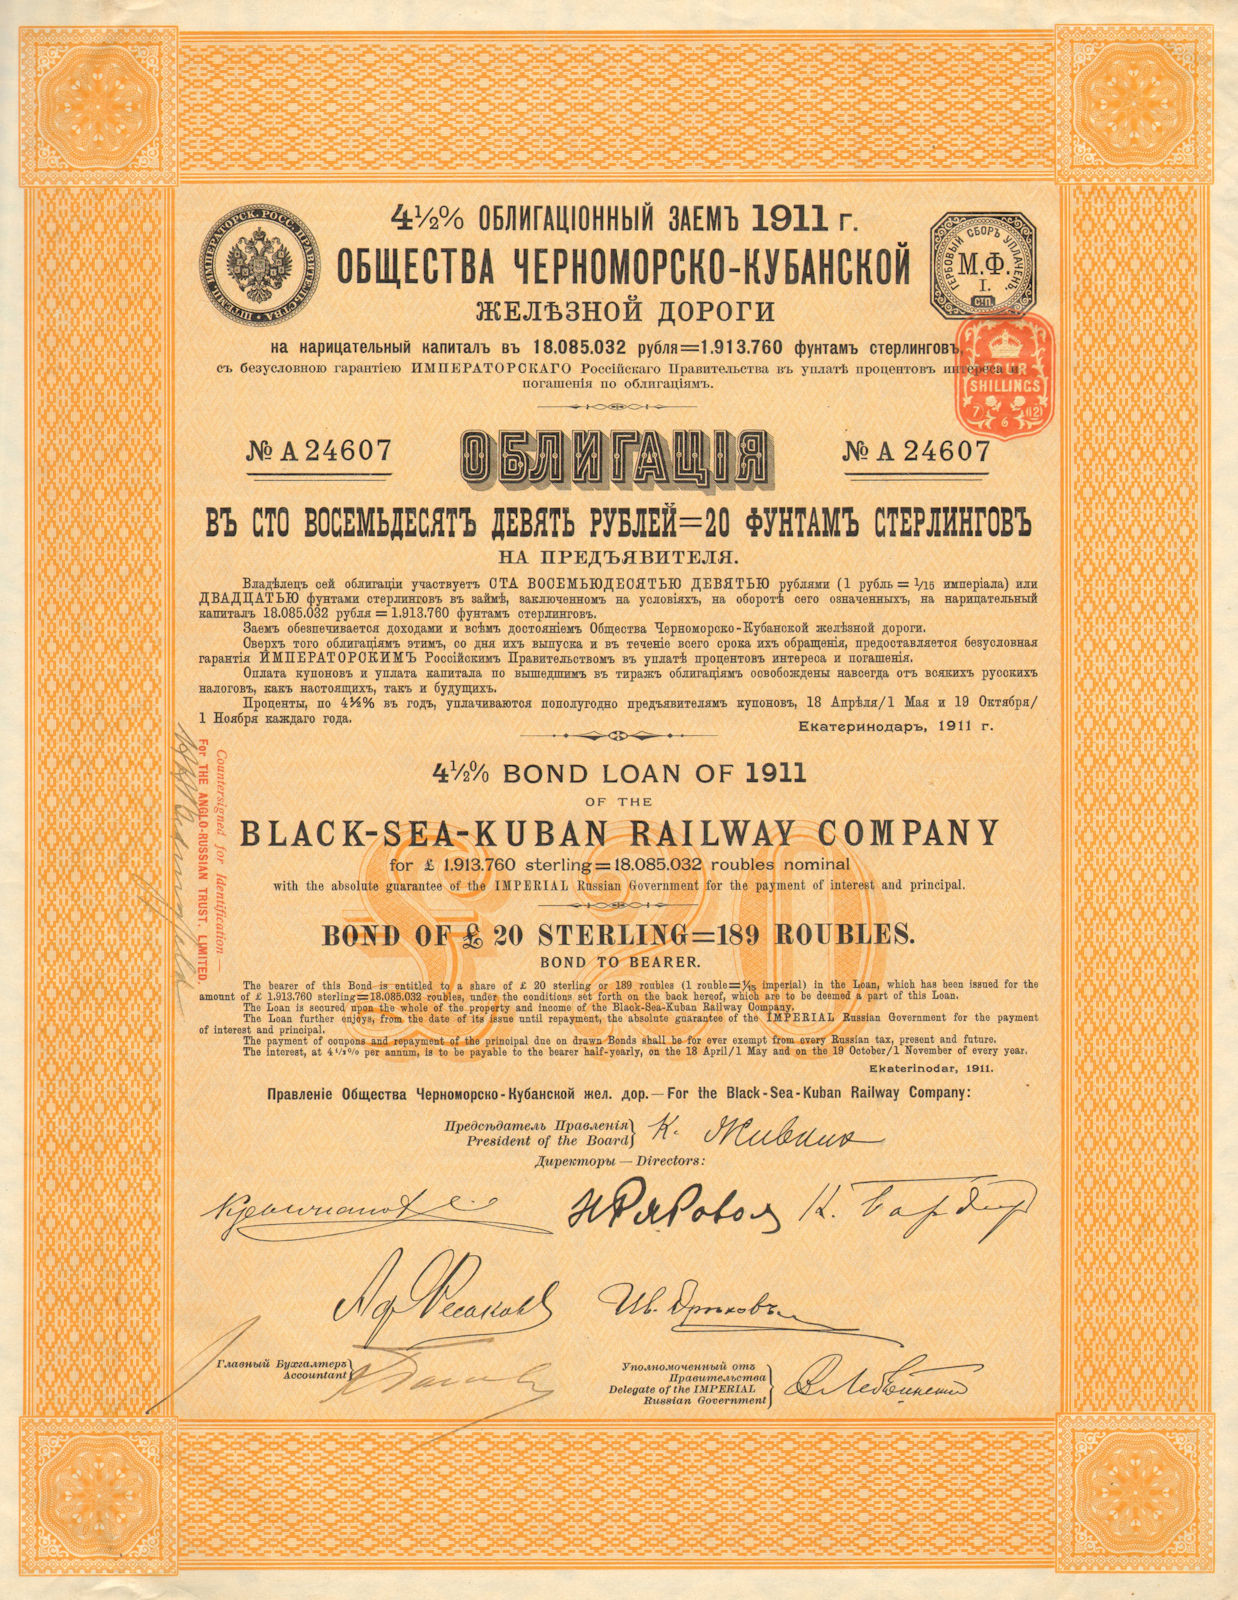 Ventspils -RYBINSK RAILWAY COMPANY BOND MOSCOW-WINDAU 4% £100 1899 old print